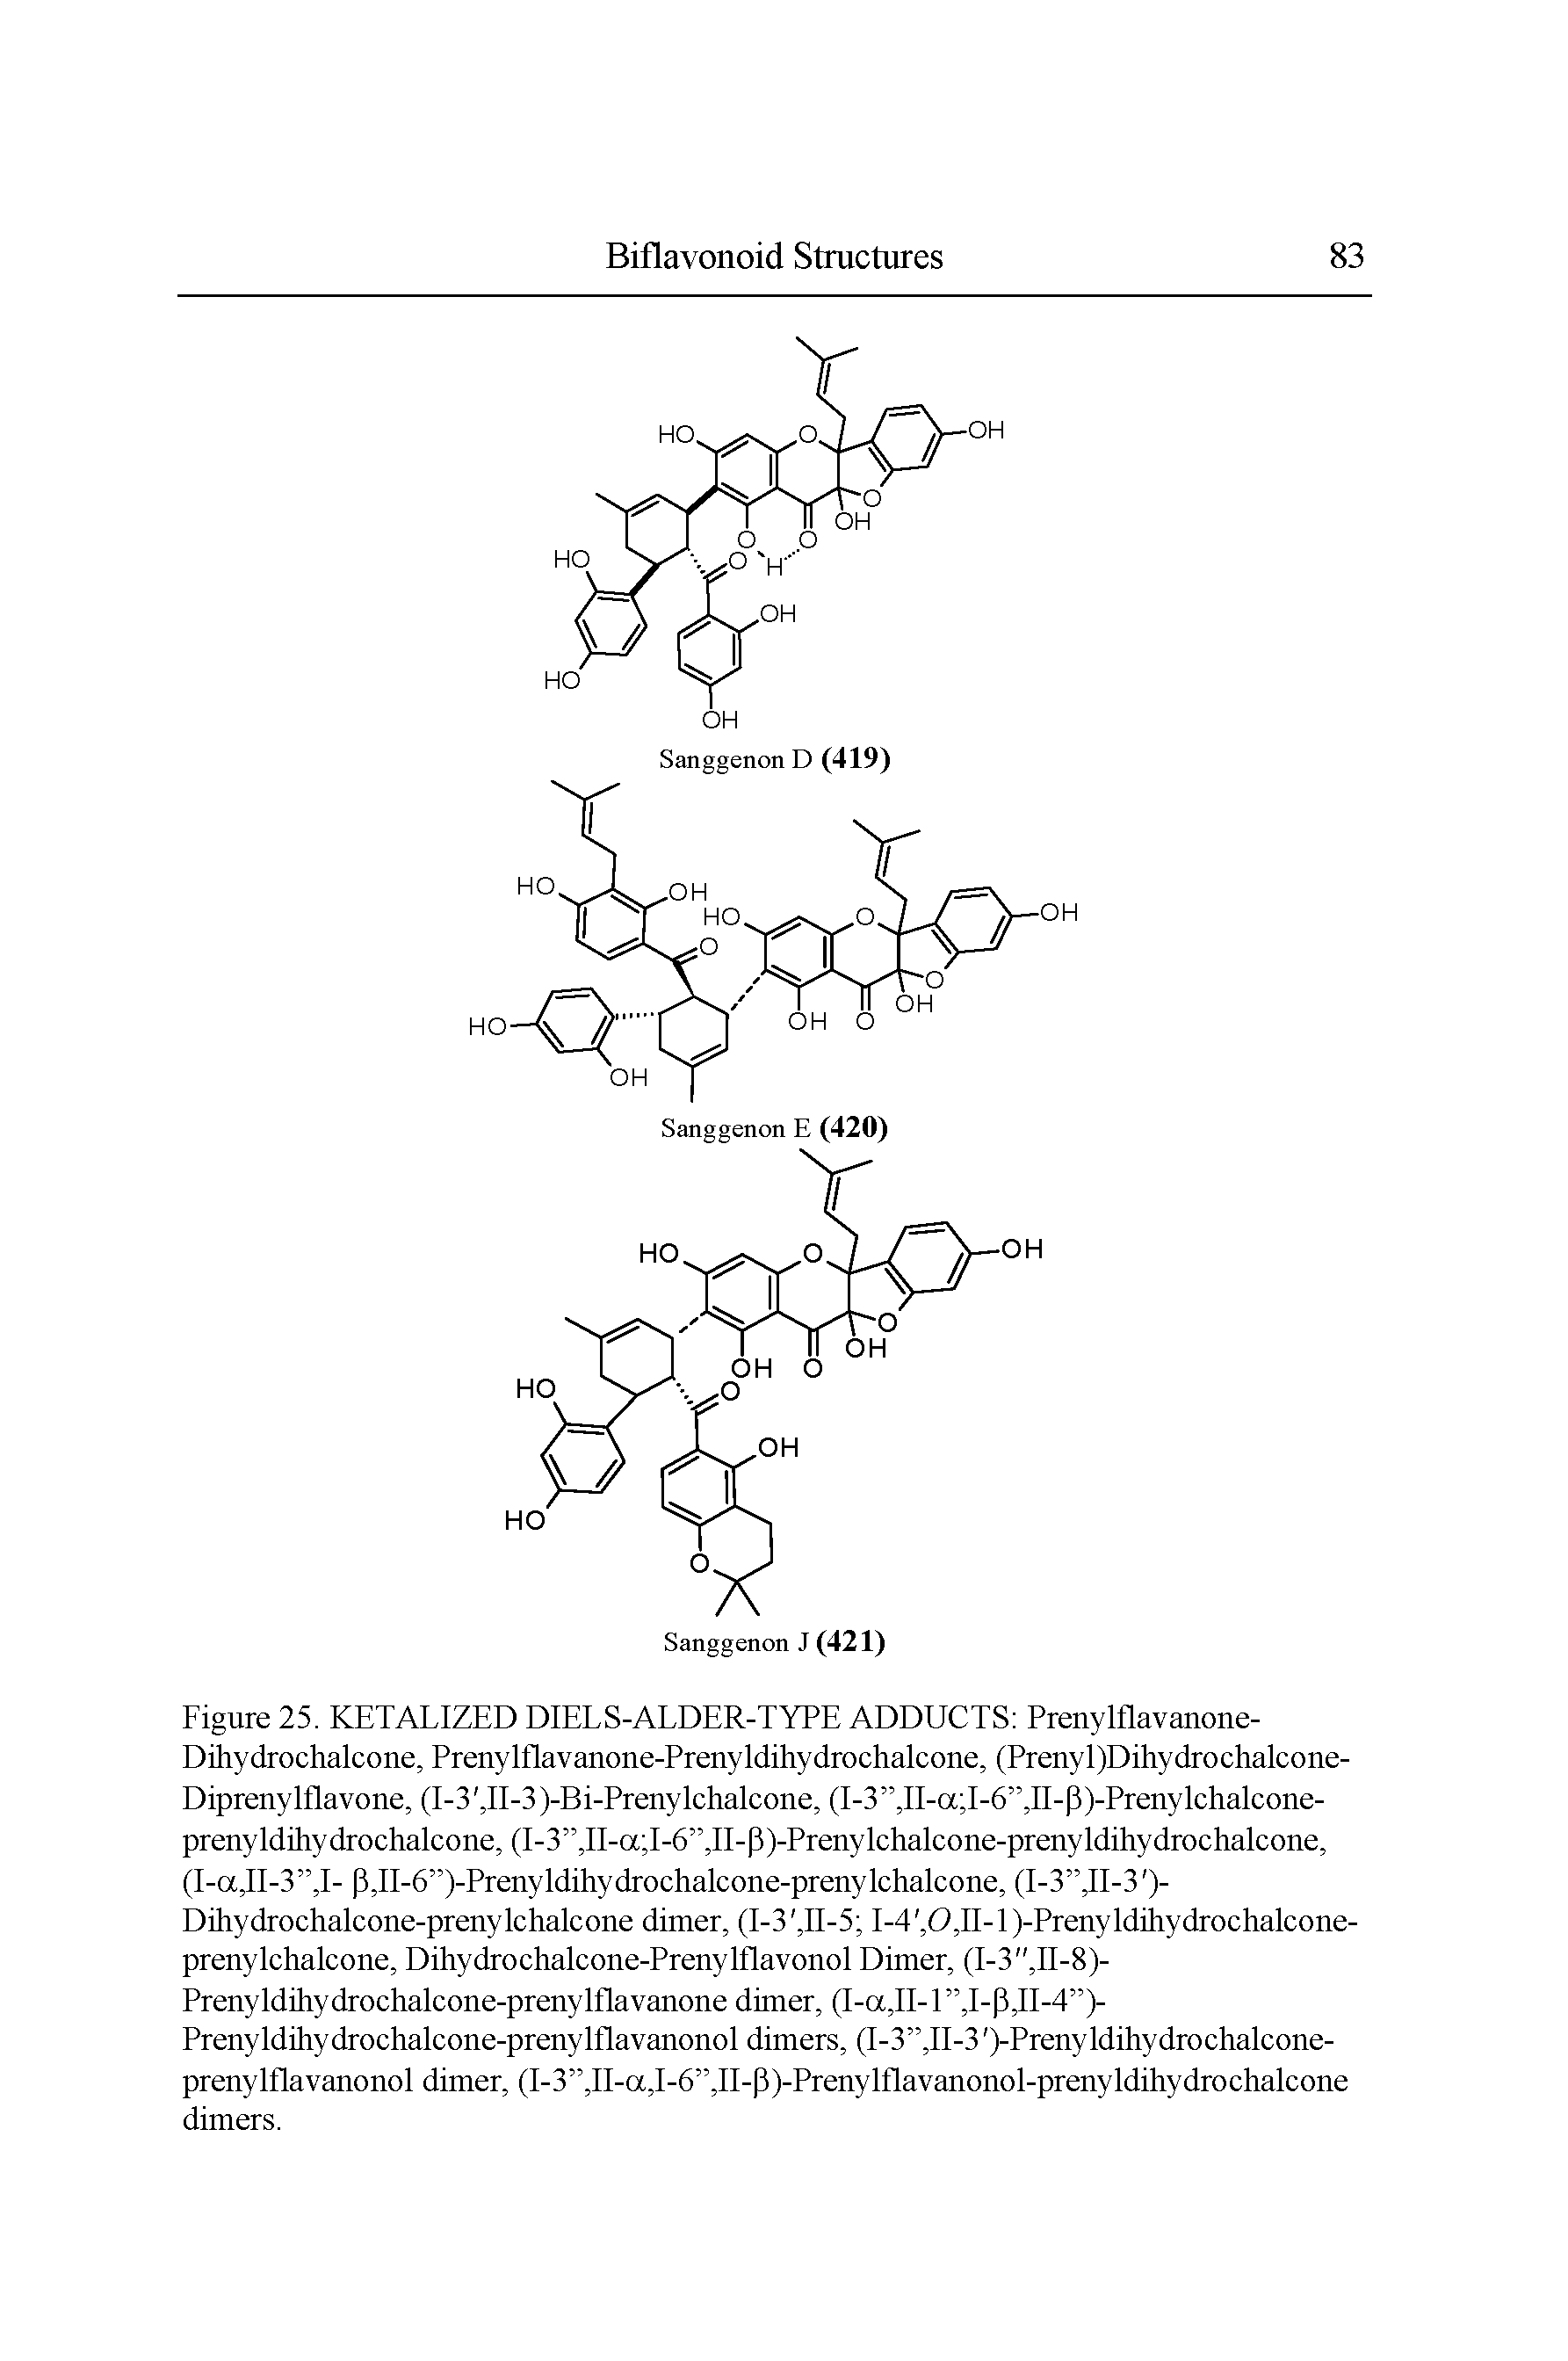 Figure 25. KETALIZED DIELS-ALDER-TYPE ADDUCTS Prenylflavanone-Dihydrochalcone, Prenylflavanone-Prenyldihydrochalcone, (Prenyl)Dihydrochalcone-Diprenylflavone, (1-3, 11-3)-Bi-Prenylchalcone, (I-3 ,II-a I-6 ,II-P)-Prenylchalcone-prenyldihydrochalcone, (I-3 ,II-a I-6 ,II-P)-Prenylchalcone-prenyldihydrochalcone, (I-a,II-3 ,I- p,II-6 )-Prenyldihydrochalcone-prenylchalcone, (I-3 ,II-3 )-Dihydrochalcone-prenylchalcone dimer, (I-3, II-5 1-4, 0,11-1 )-Prenyldihydrochalcone-prenylchalcone, Dihydrochalcone-Prenylflavonol Dimer, (I-3",II-8)-Prenyldihydrochalcone-prenylflavanone dimer, (I-a,II-1 ,I-P,II-4 )-Prenyldihydrochalcone-prenylflavanonol dimers, (I-3 ,II-3 )-PrenyIdihydrochalcone-prenylflavanonol dimer, (I-3 ,II-a,I-6 ,II-P)-Prenylflavanonol-prenyldihydrochalcone dimers.